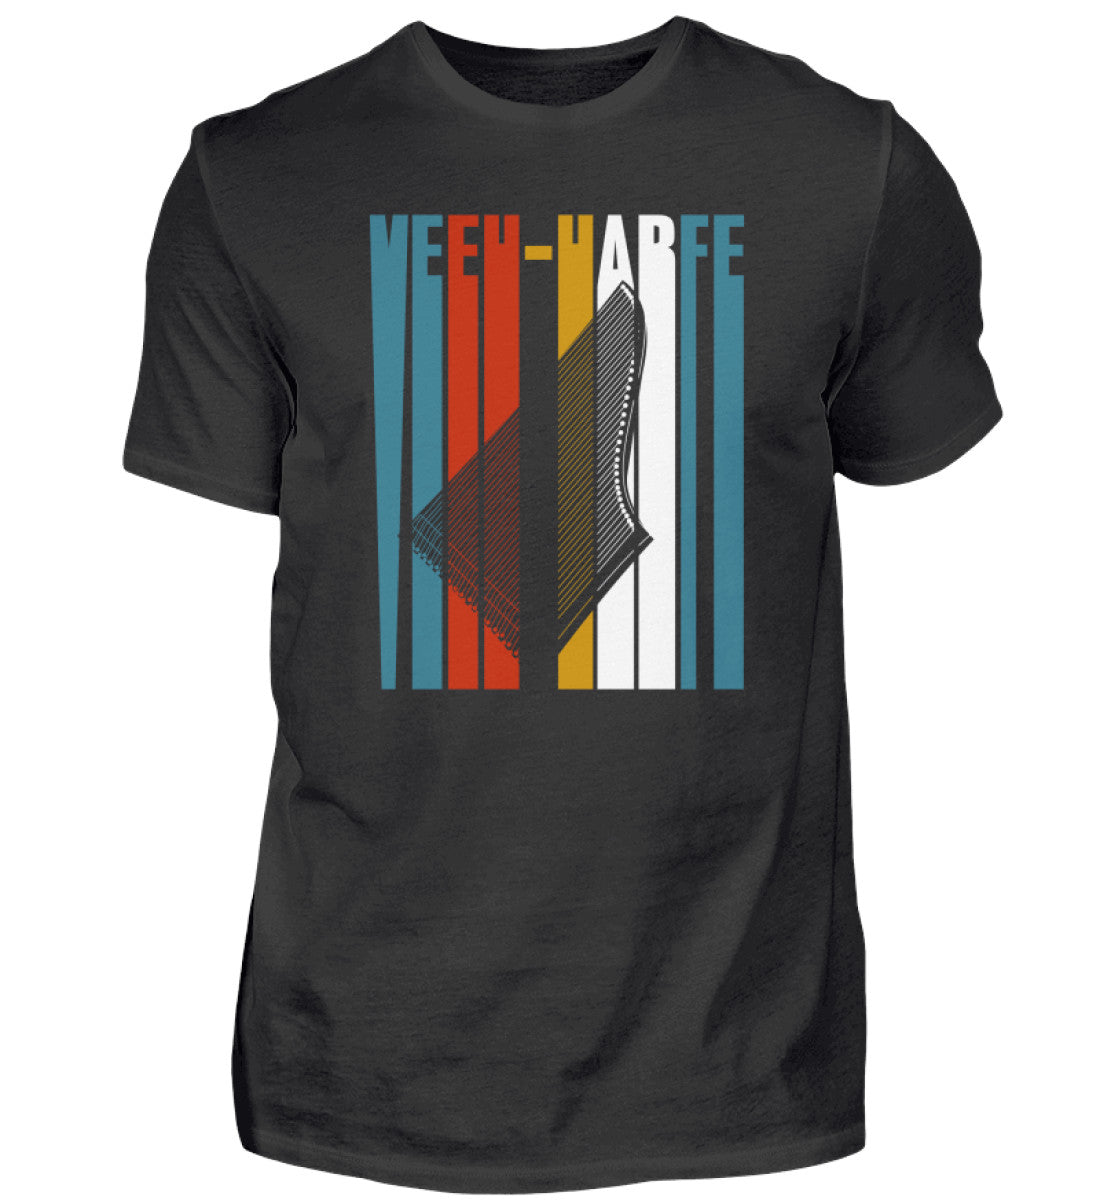 Veeh-Harfe T-Shirt